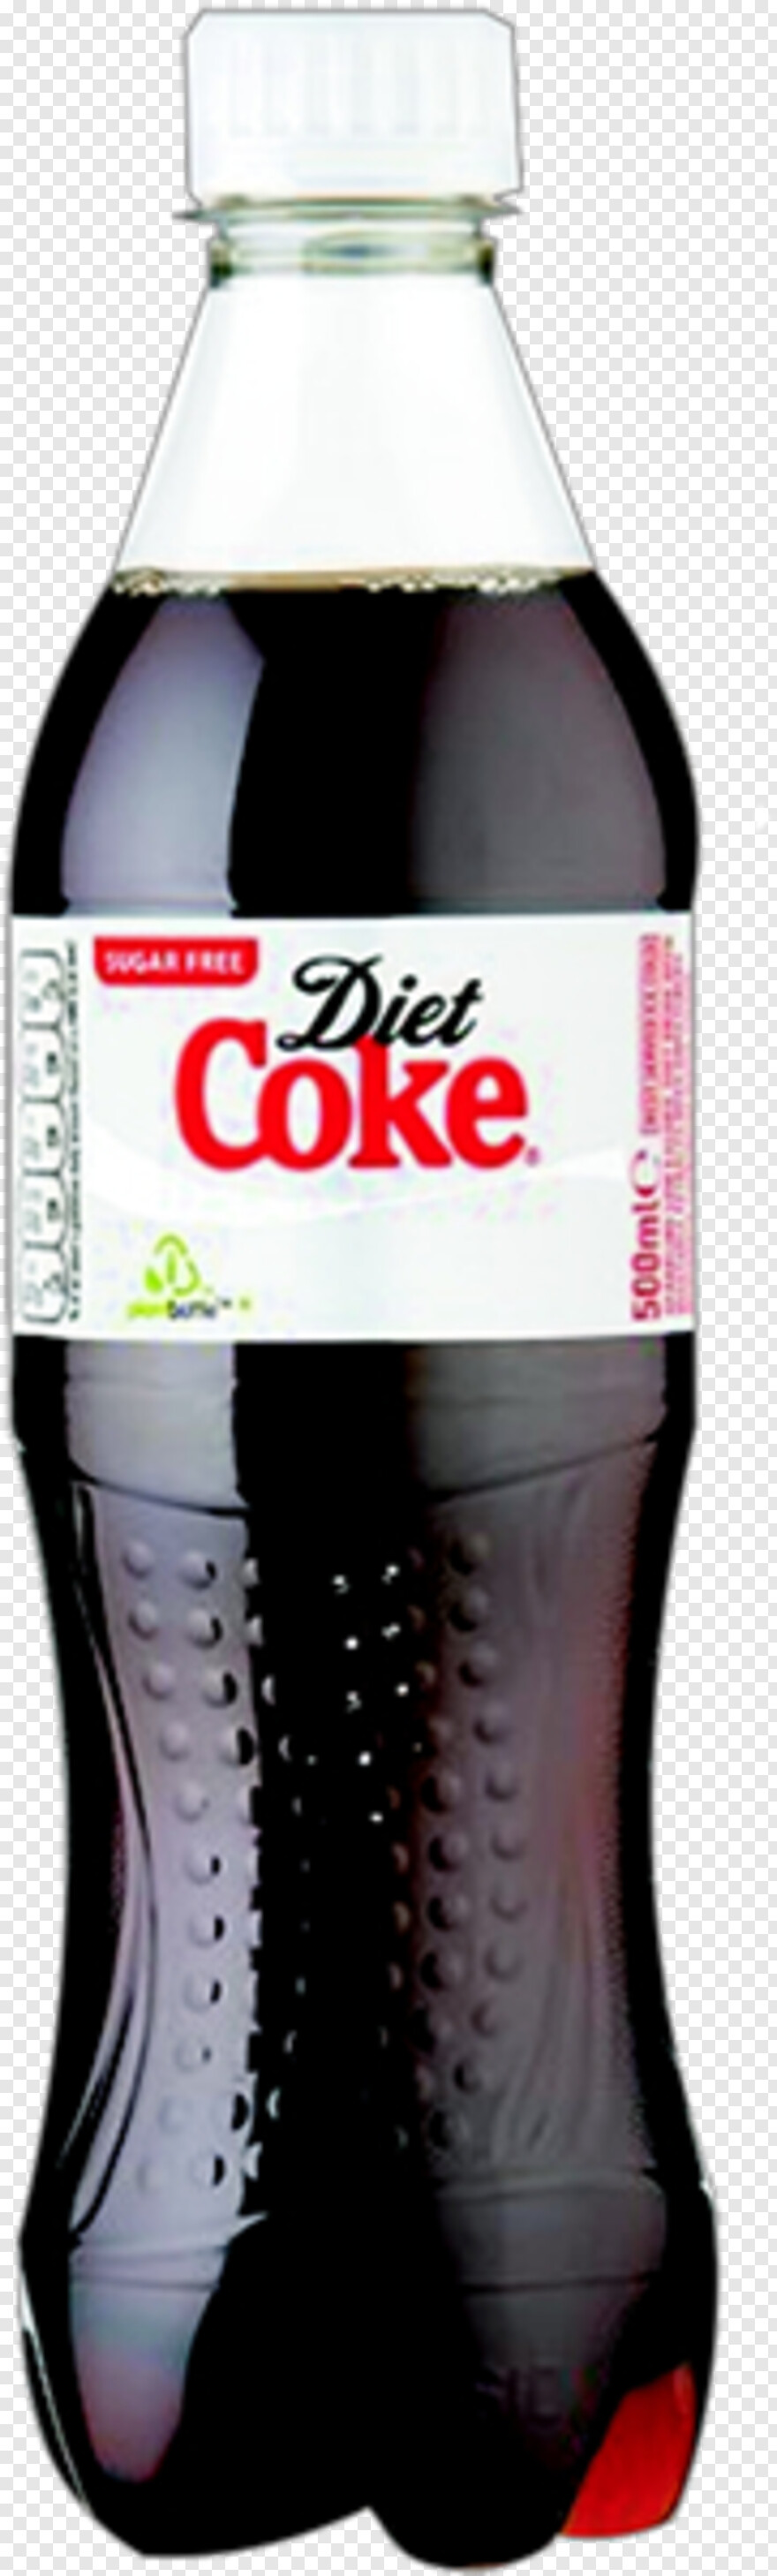 coke-can # 986736